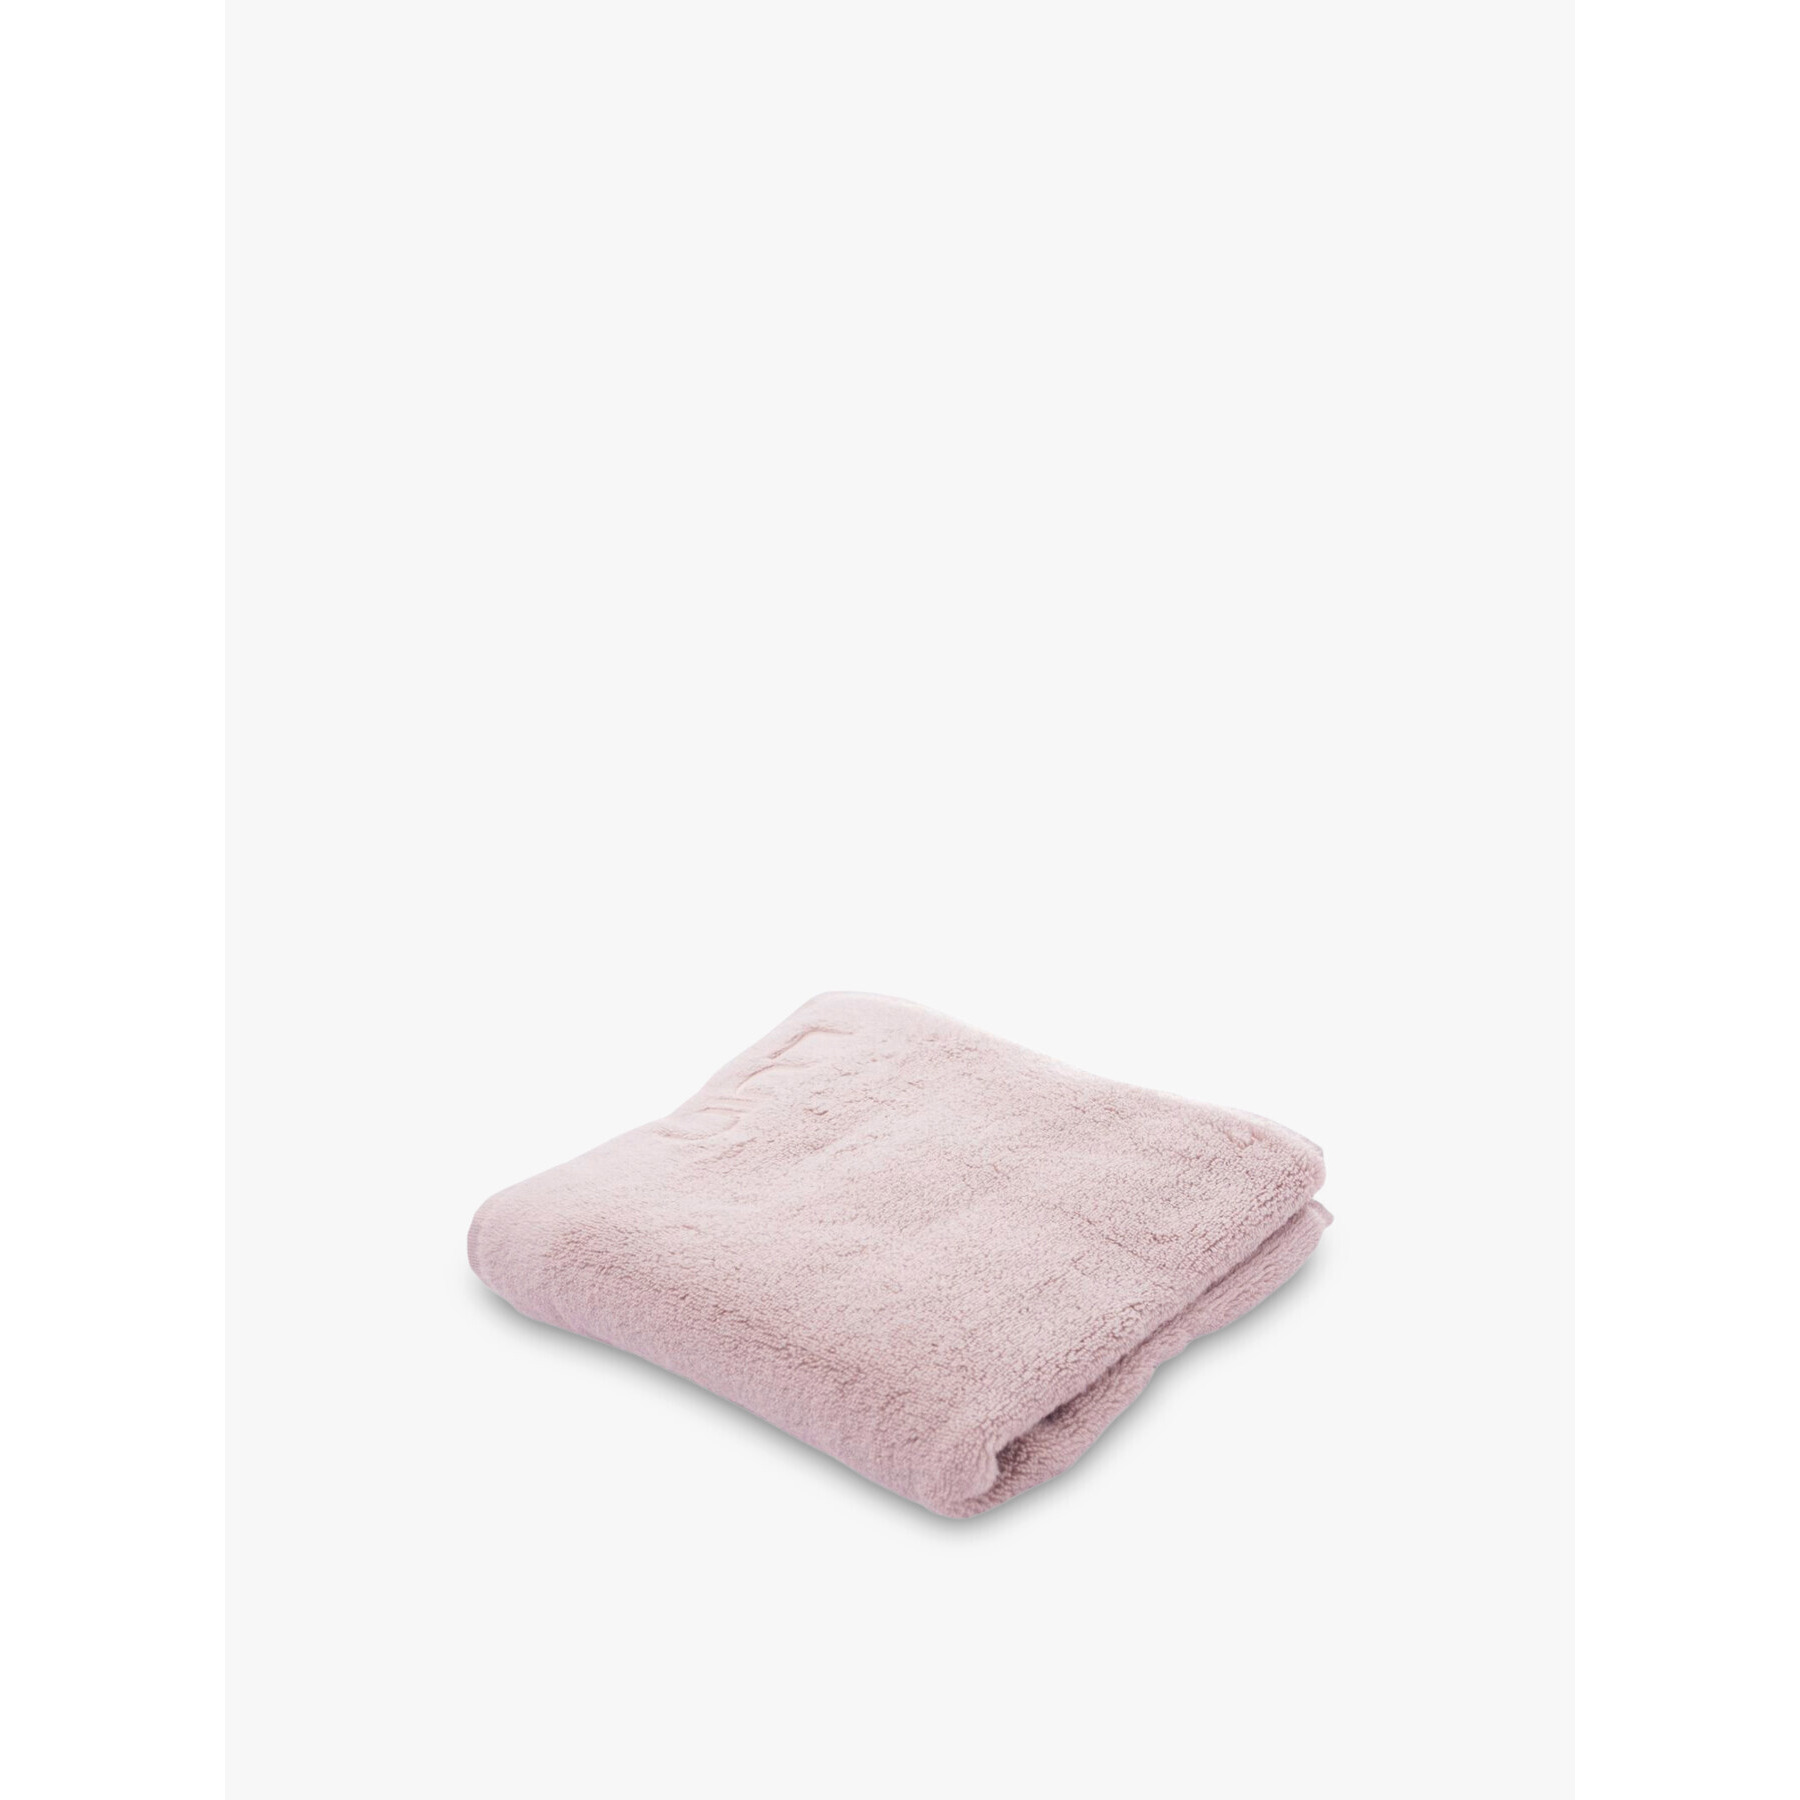 Luin Living Hand Towel Pink - image 1